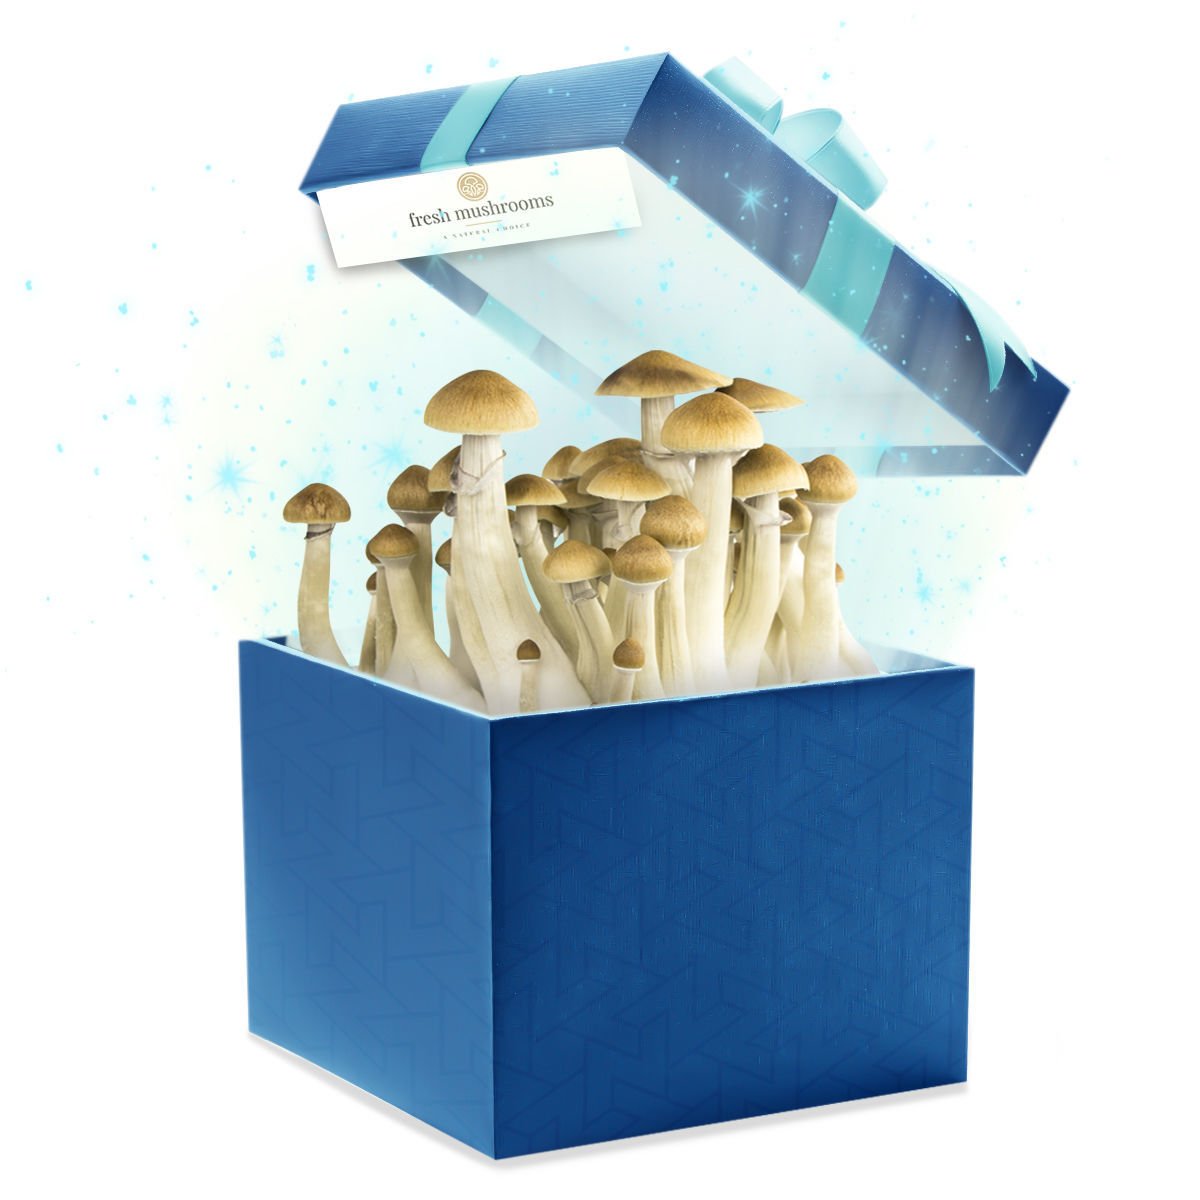 Fresh Vs Dried Magic Mushrooms: Who Reigns Supreme? - Zamnesia